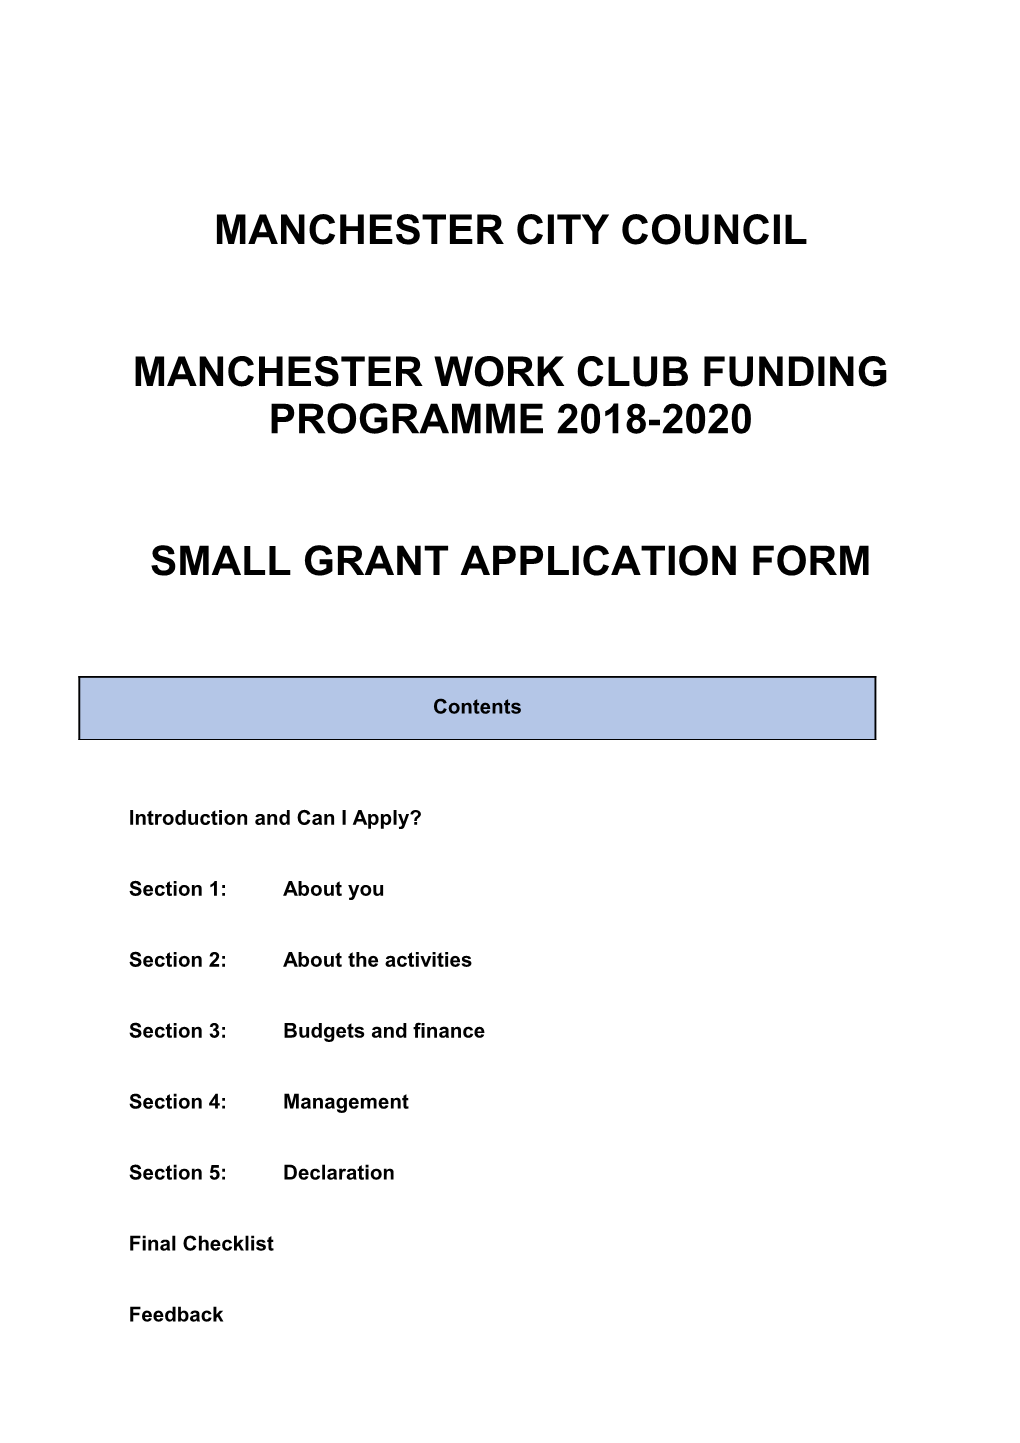 Manchester Work Club Funding Programme 2018-2020